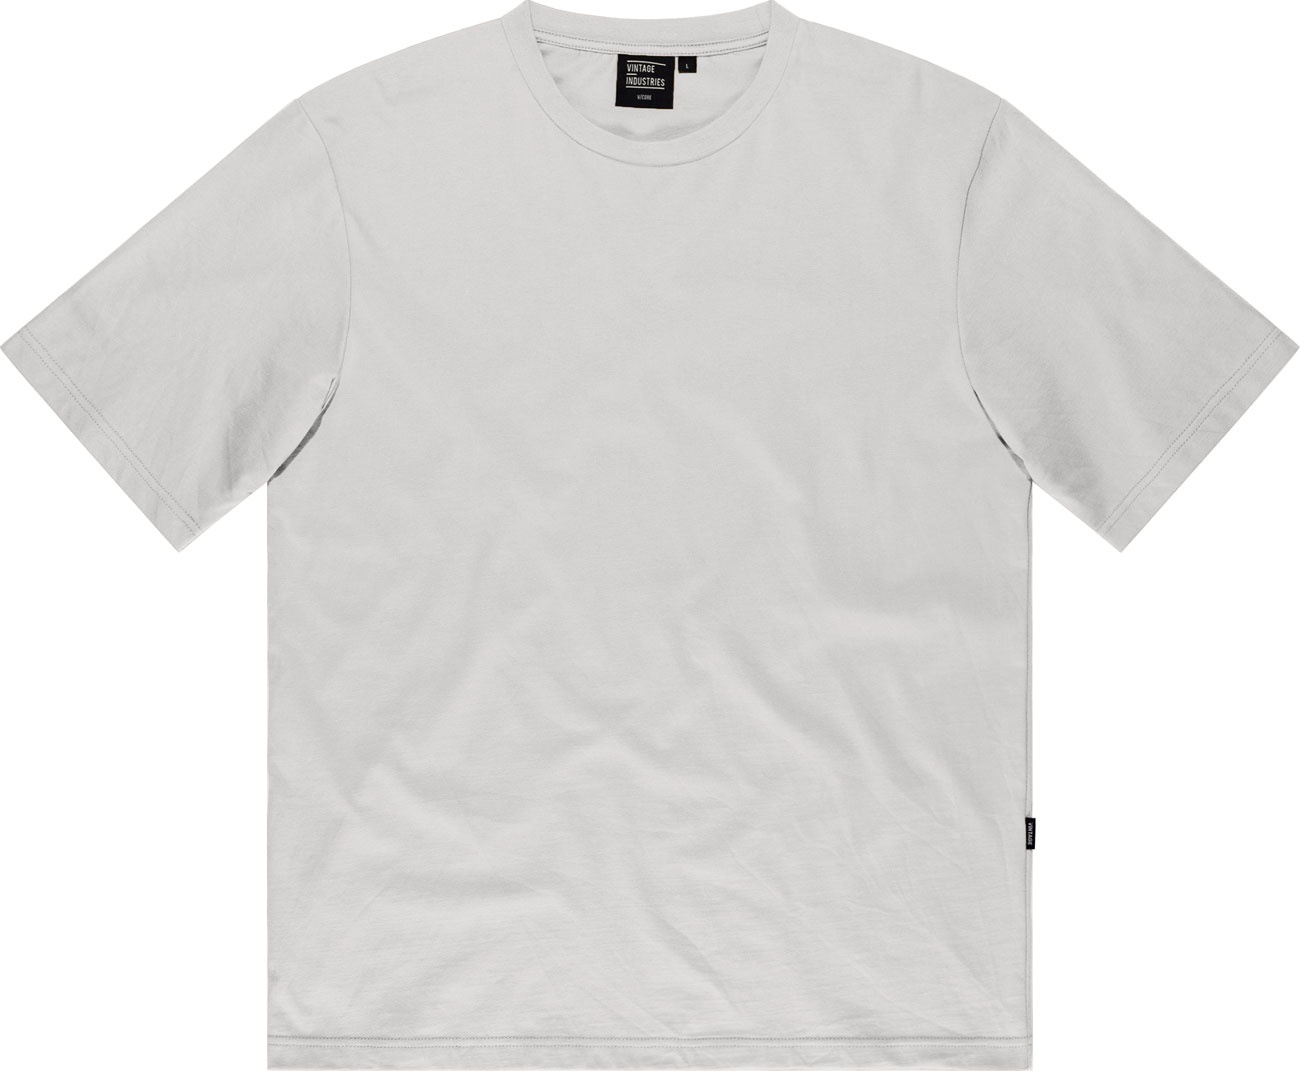 Vintage Industries Lex, t-shirt - Blanc - 3XL